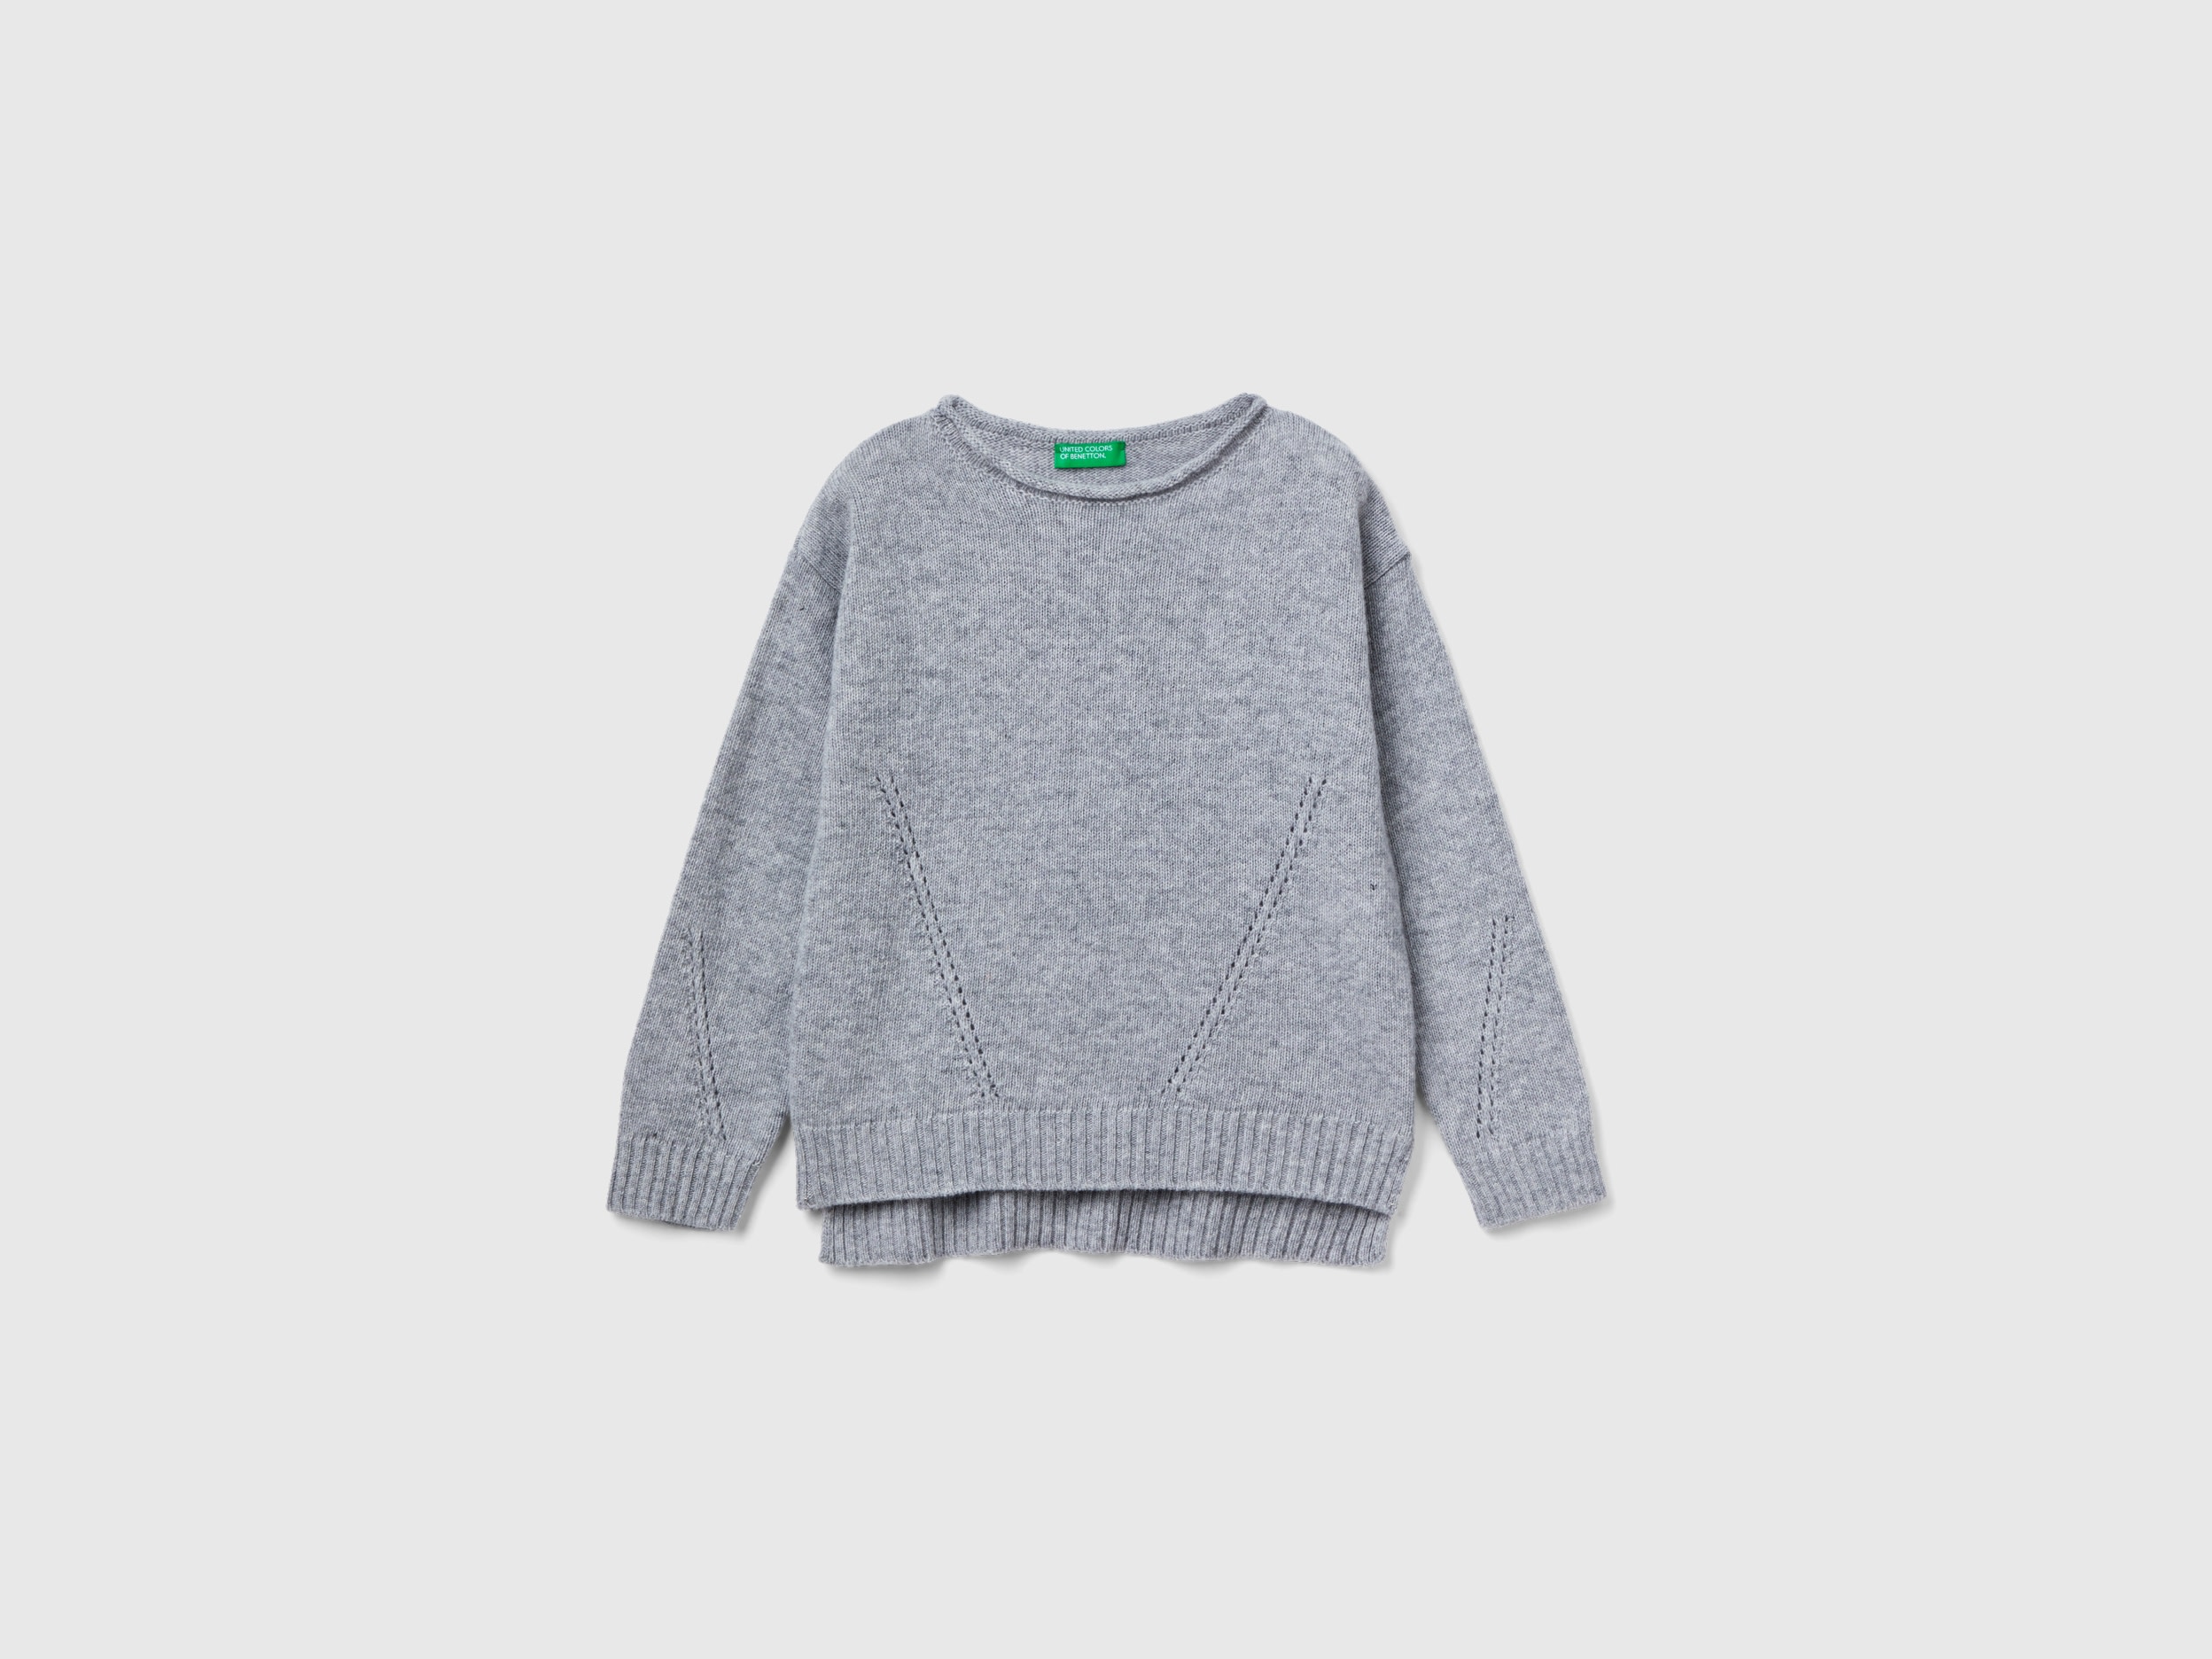 Benetton, Knit Sweater With Playful Stitching, size S, Light Gray, Kids